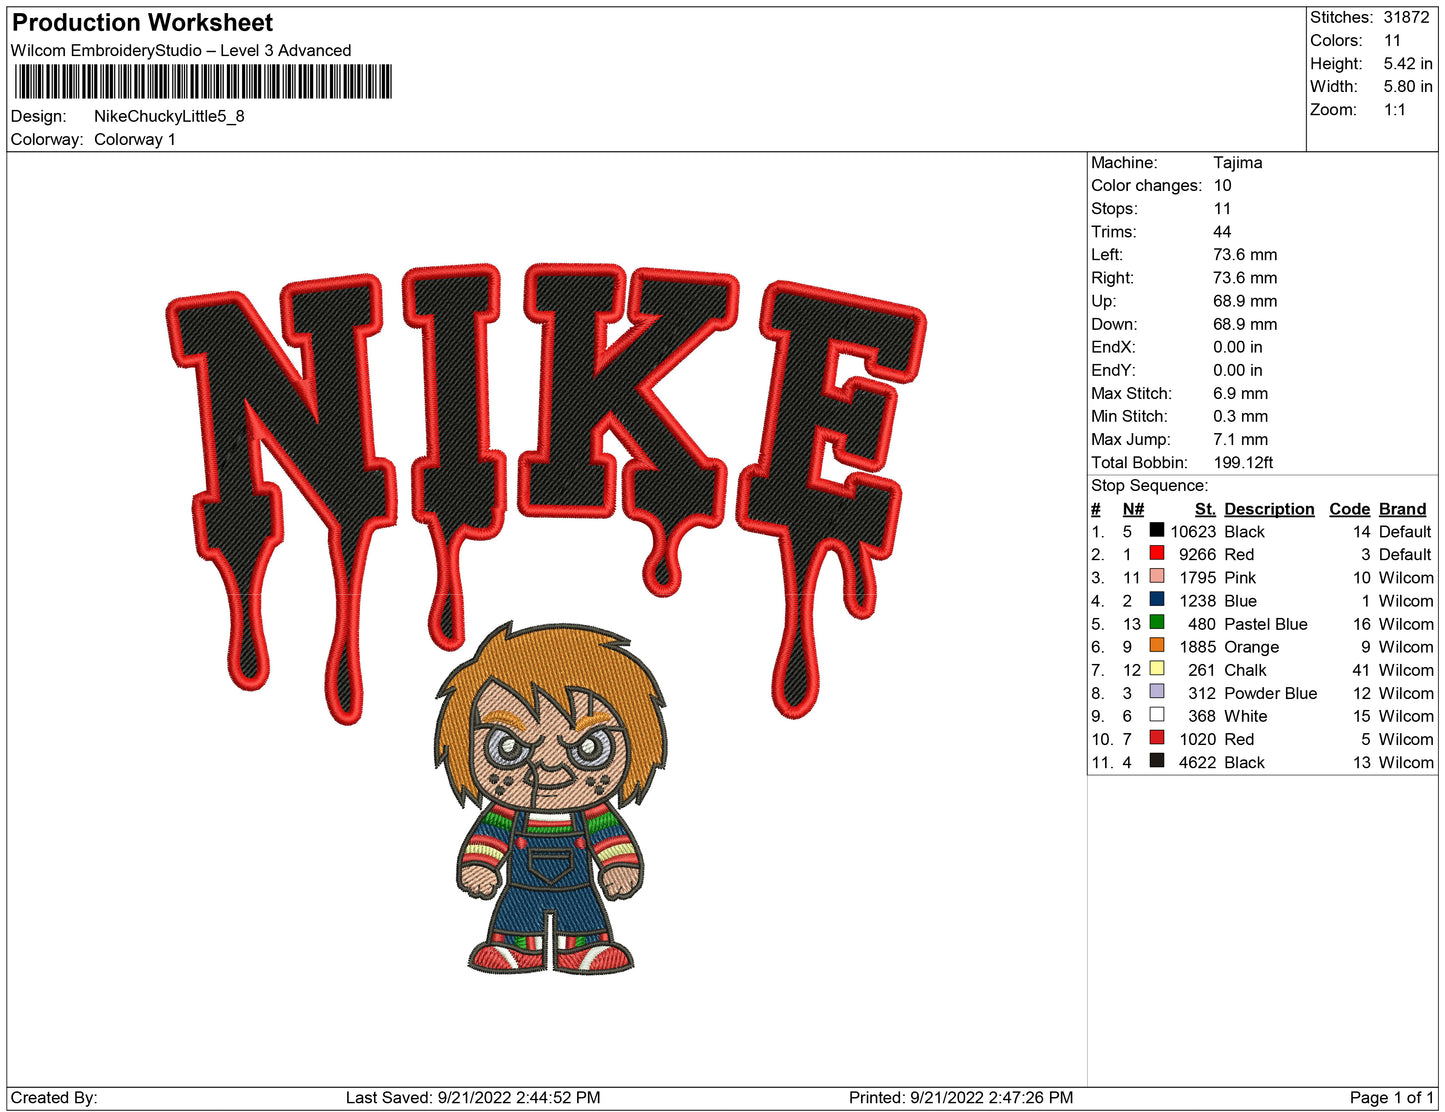 Nike Chucky Little